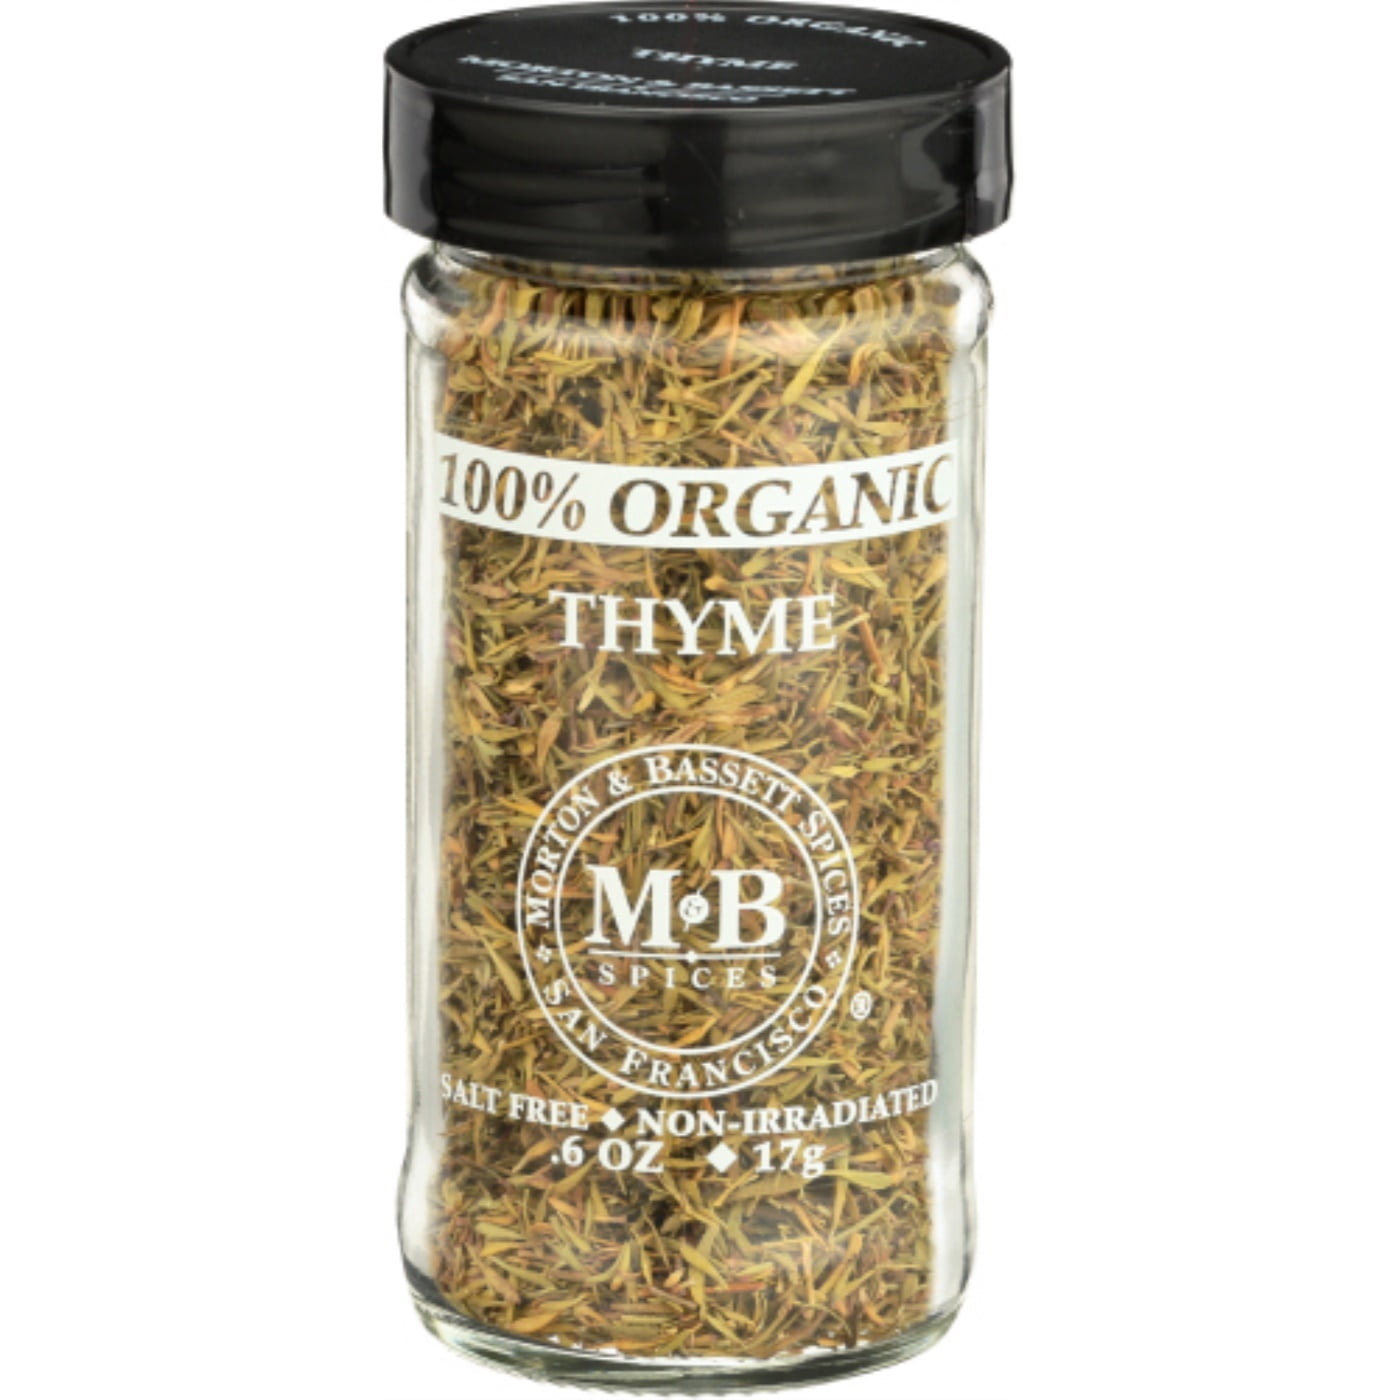 Morton & Bassett Organic Thyme 0.6 Oz Jar